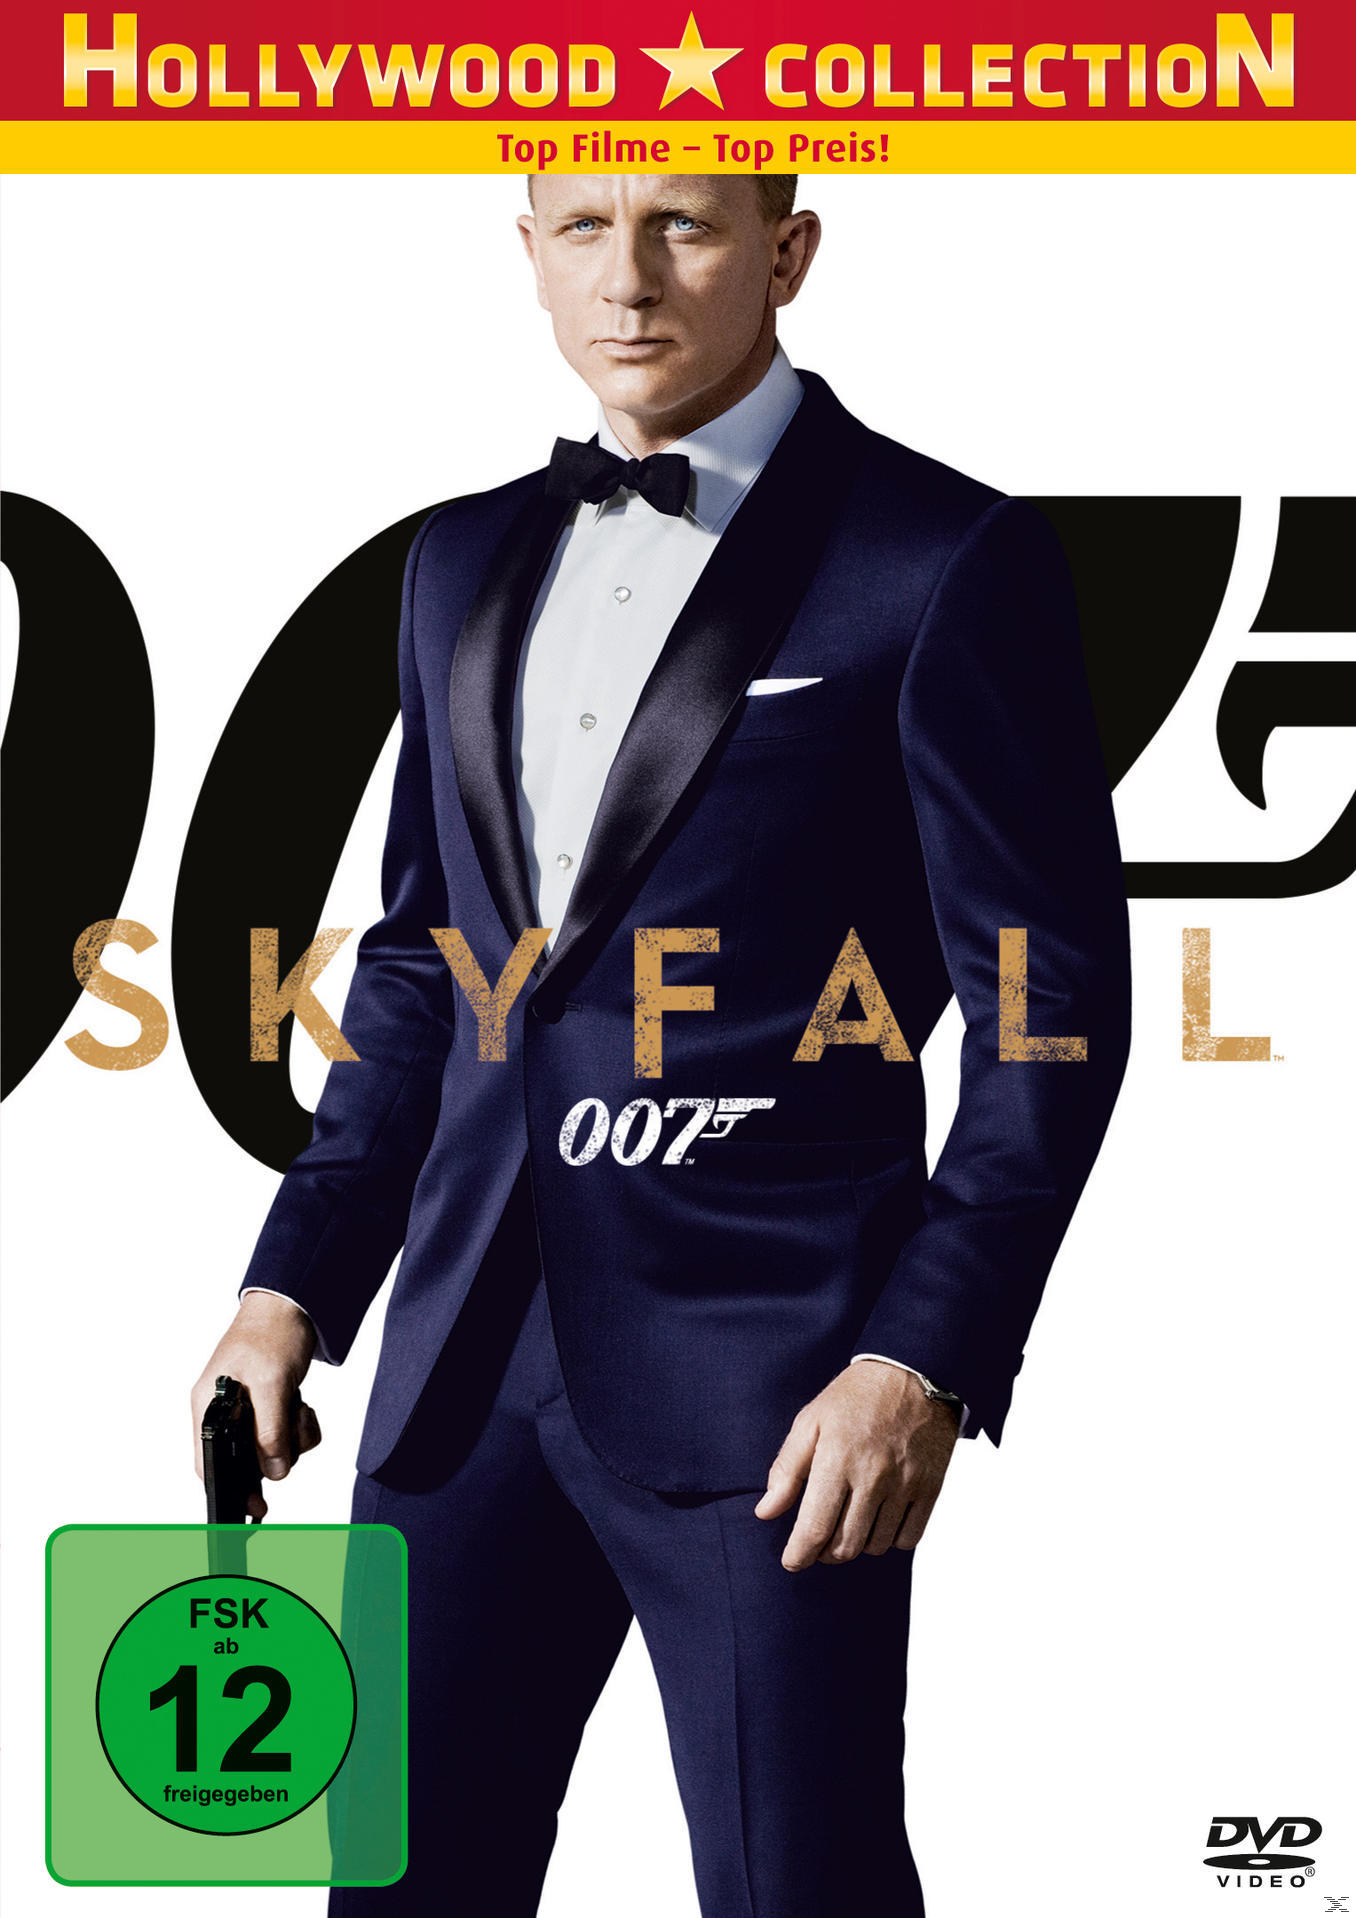 James Bond 007 DVD Skyfall 